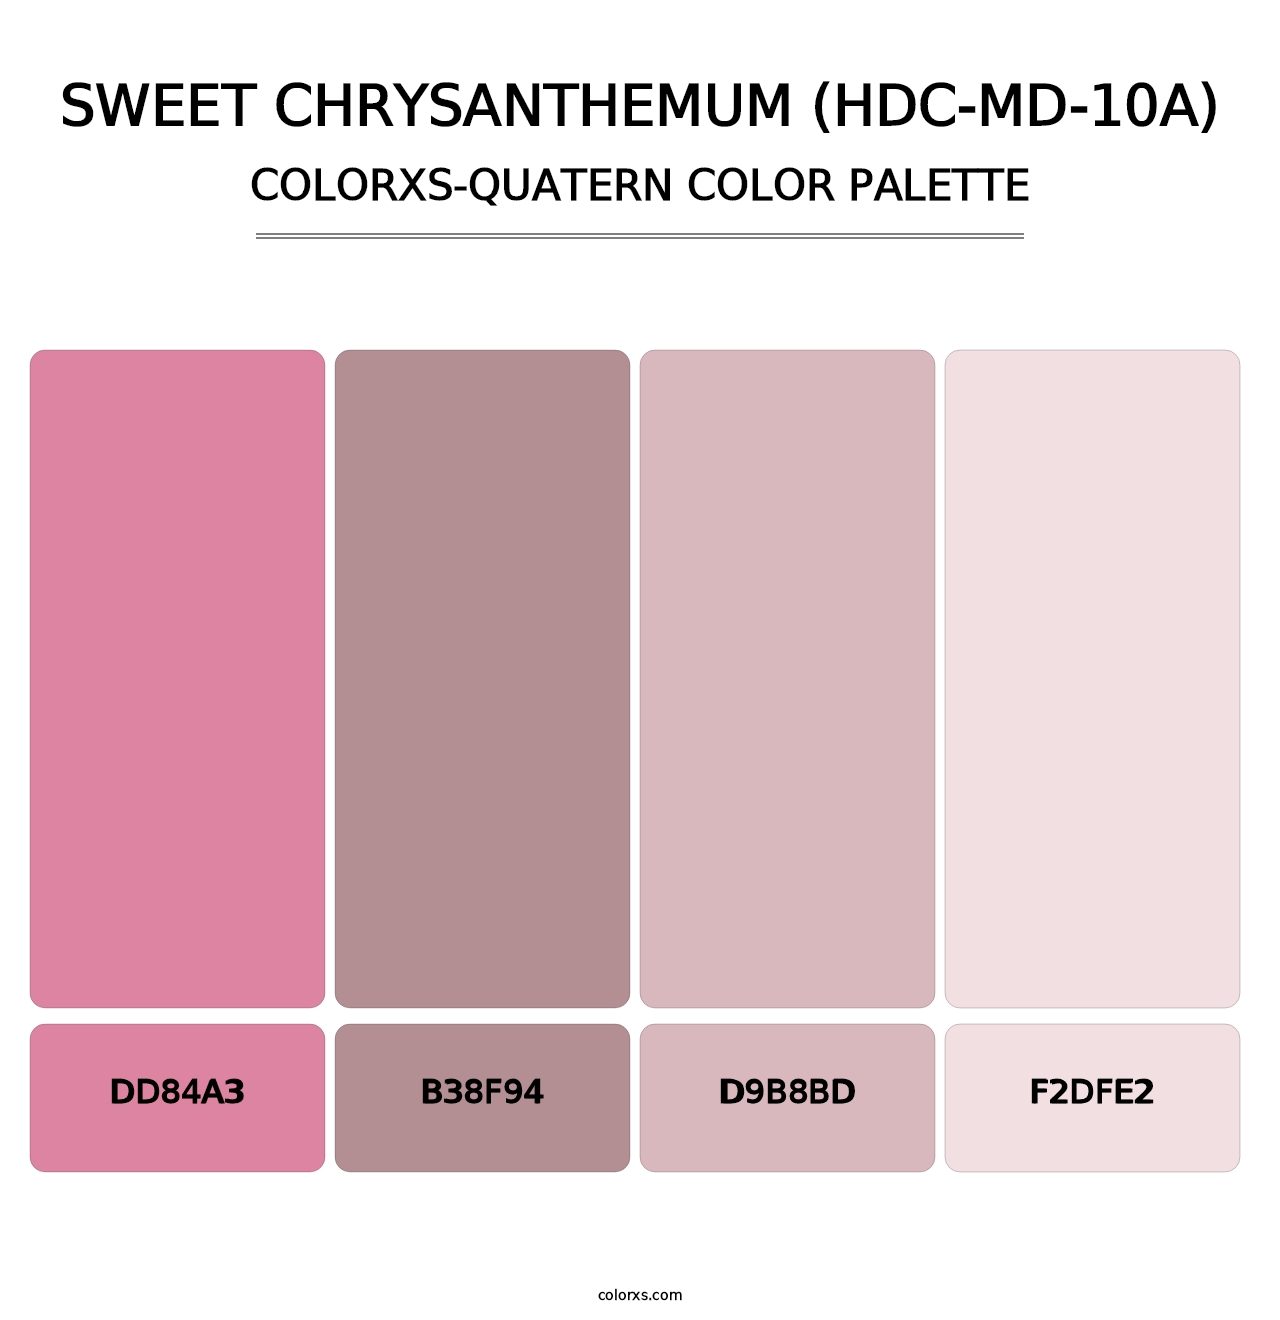 Sweet Chrysanthemum (HDC-MD-10A) - Colorxs Quatern Palette